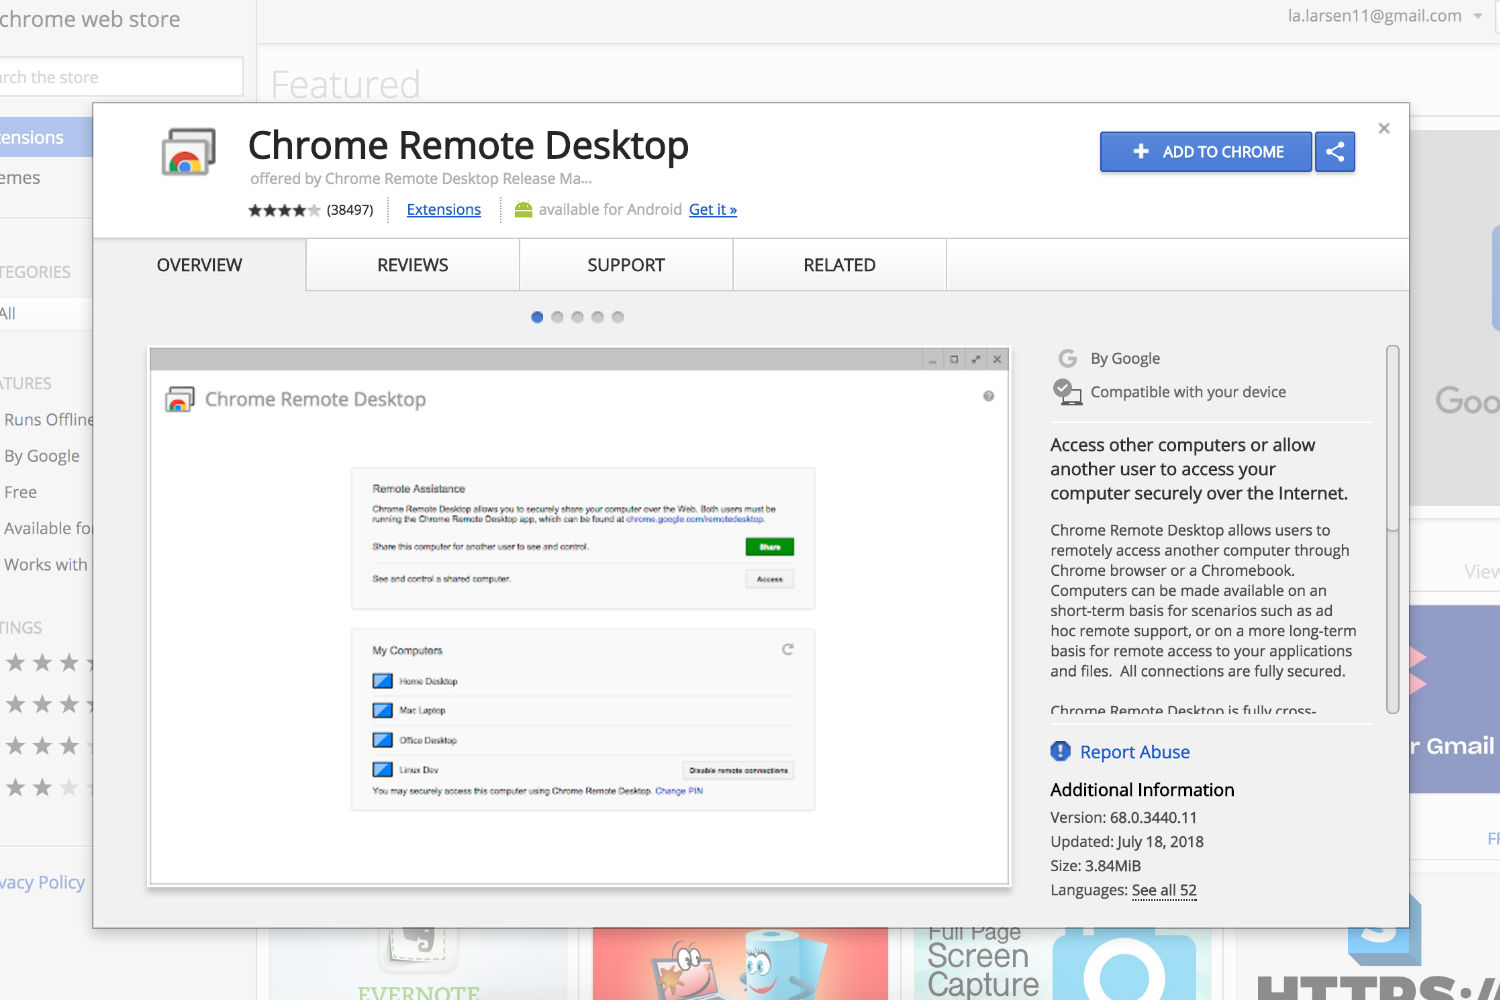 A Chrome Remote Desktop screen.